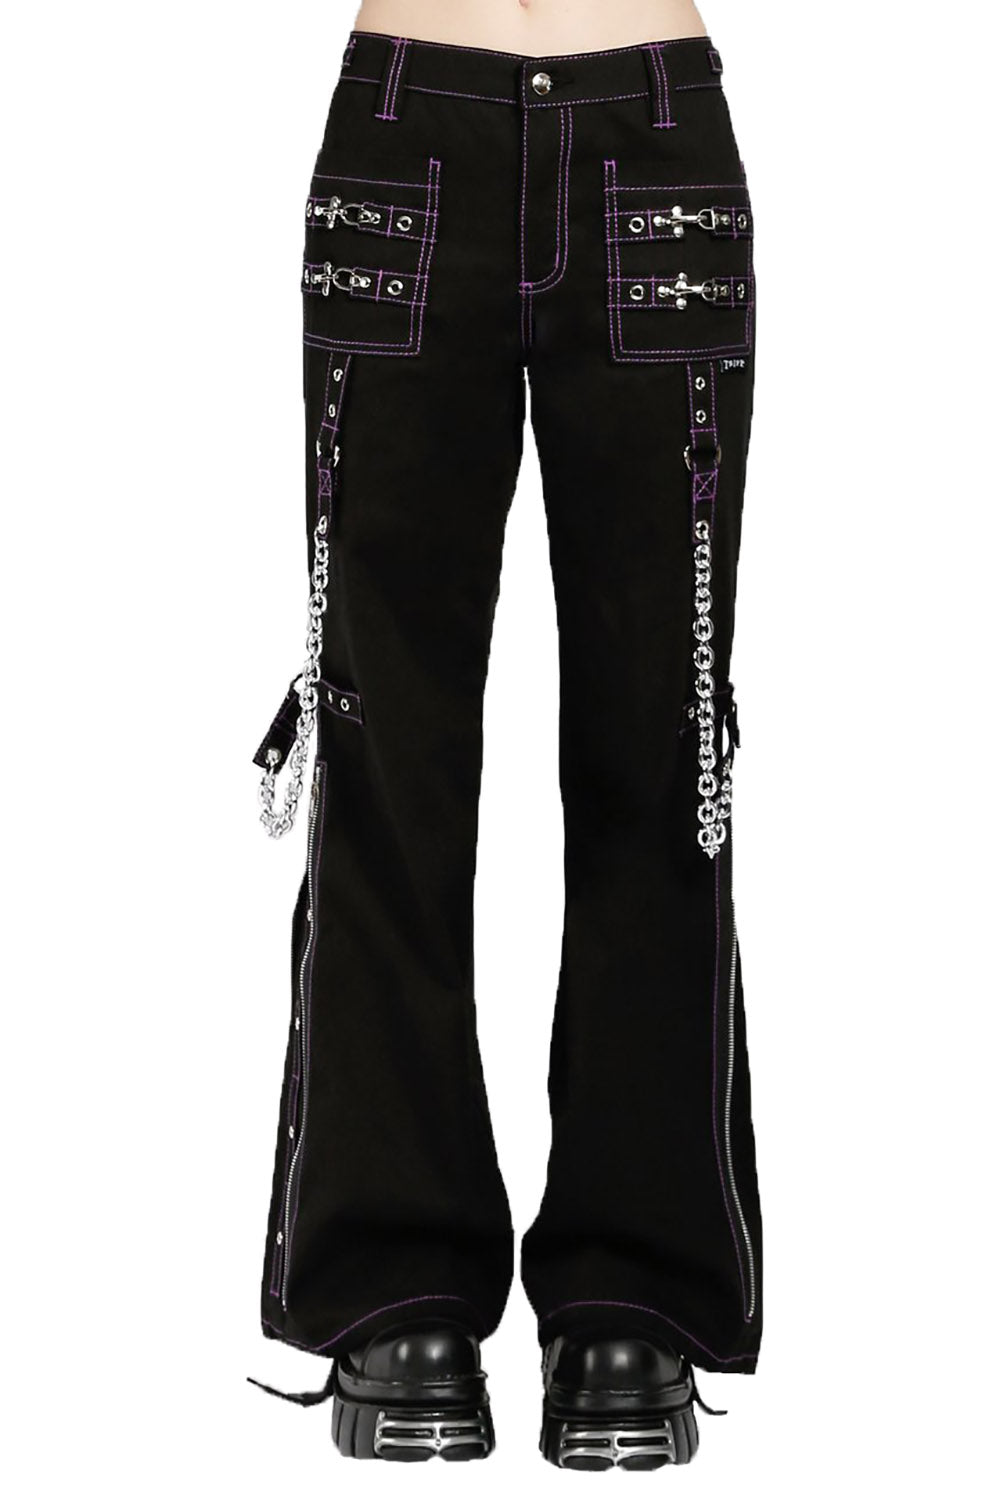 Tripp NYC Night Pants [Black/Purple]